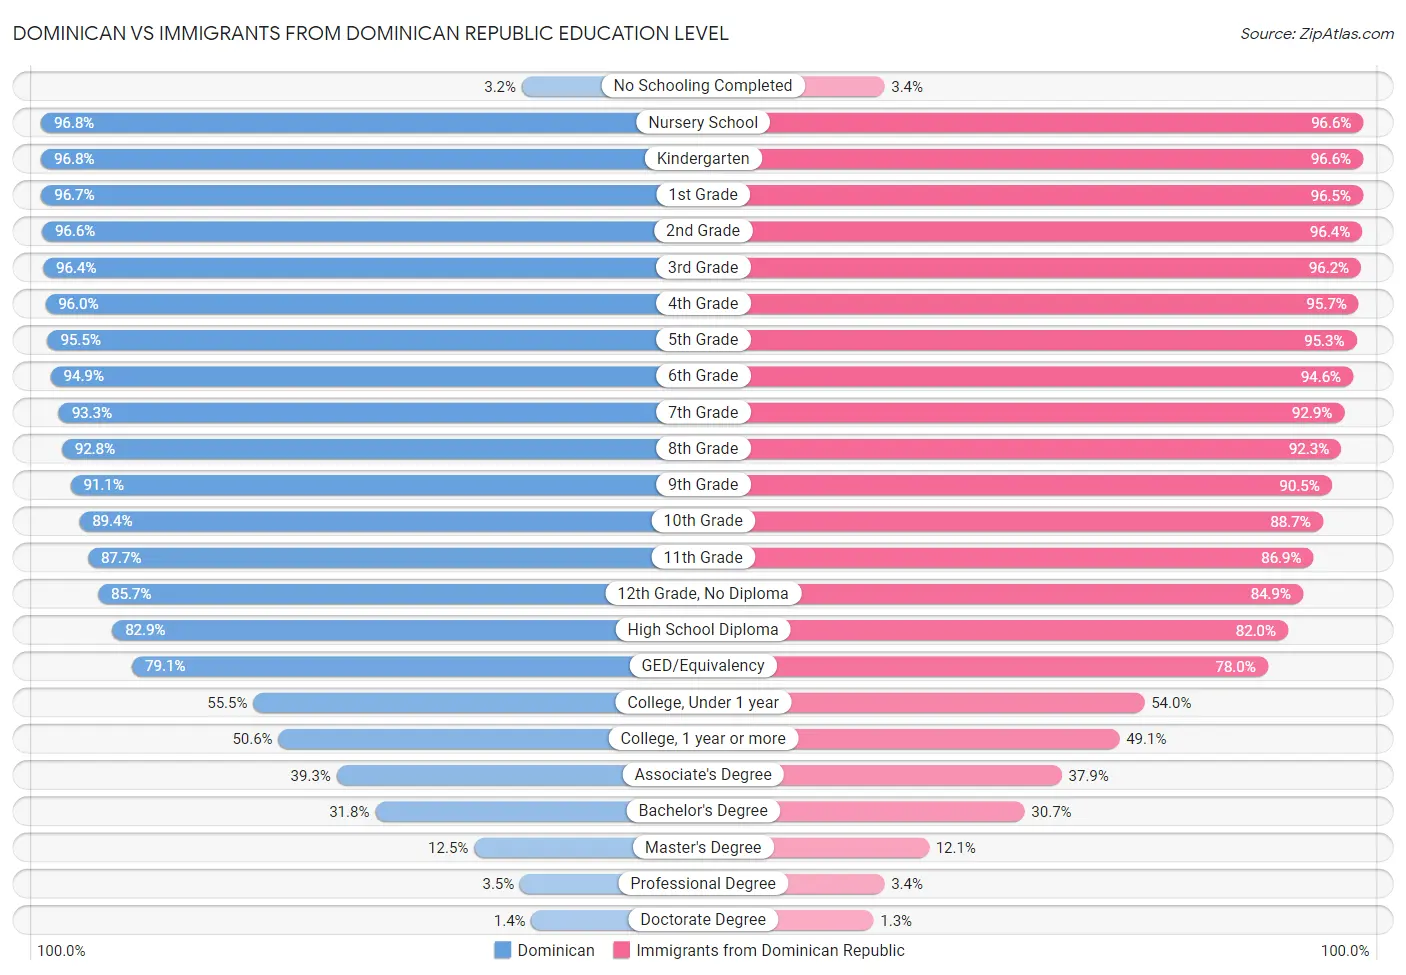 Dominican vs Immigrants from Dominican Republic Education Level